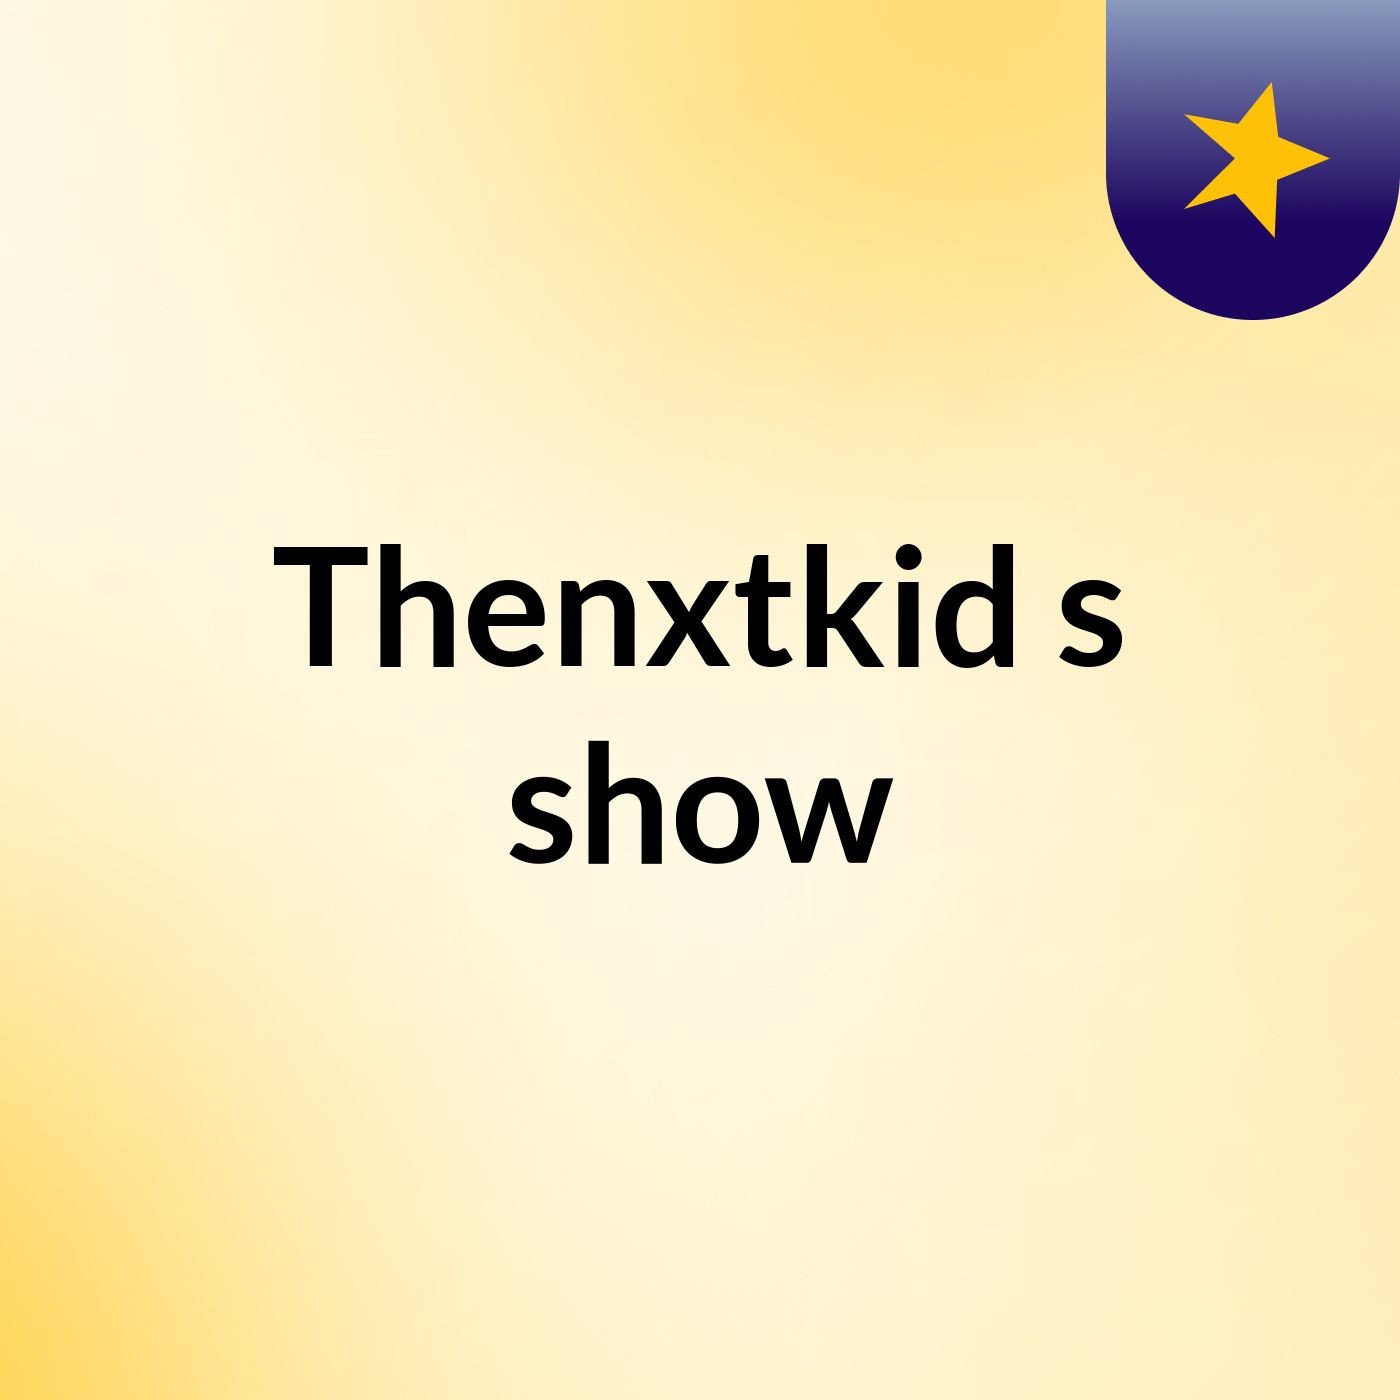 Thenxtkid's show